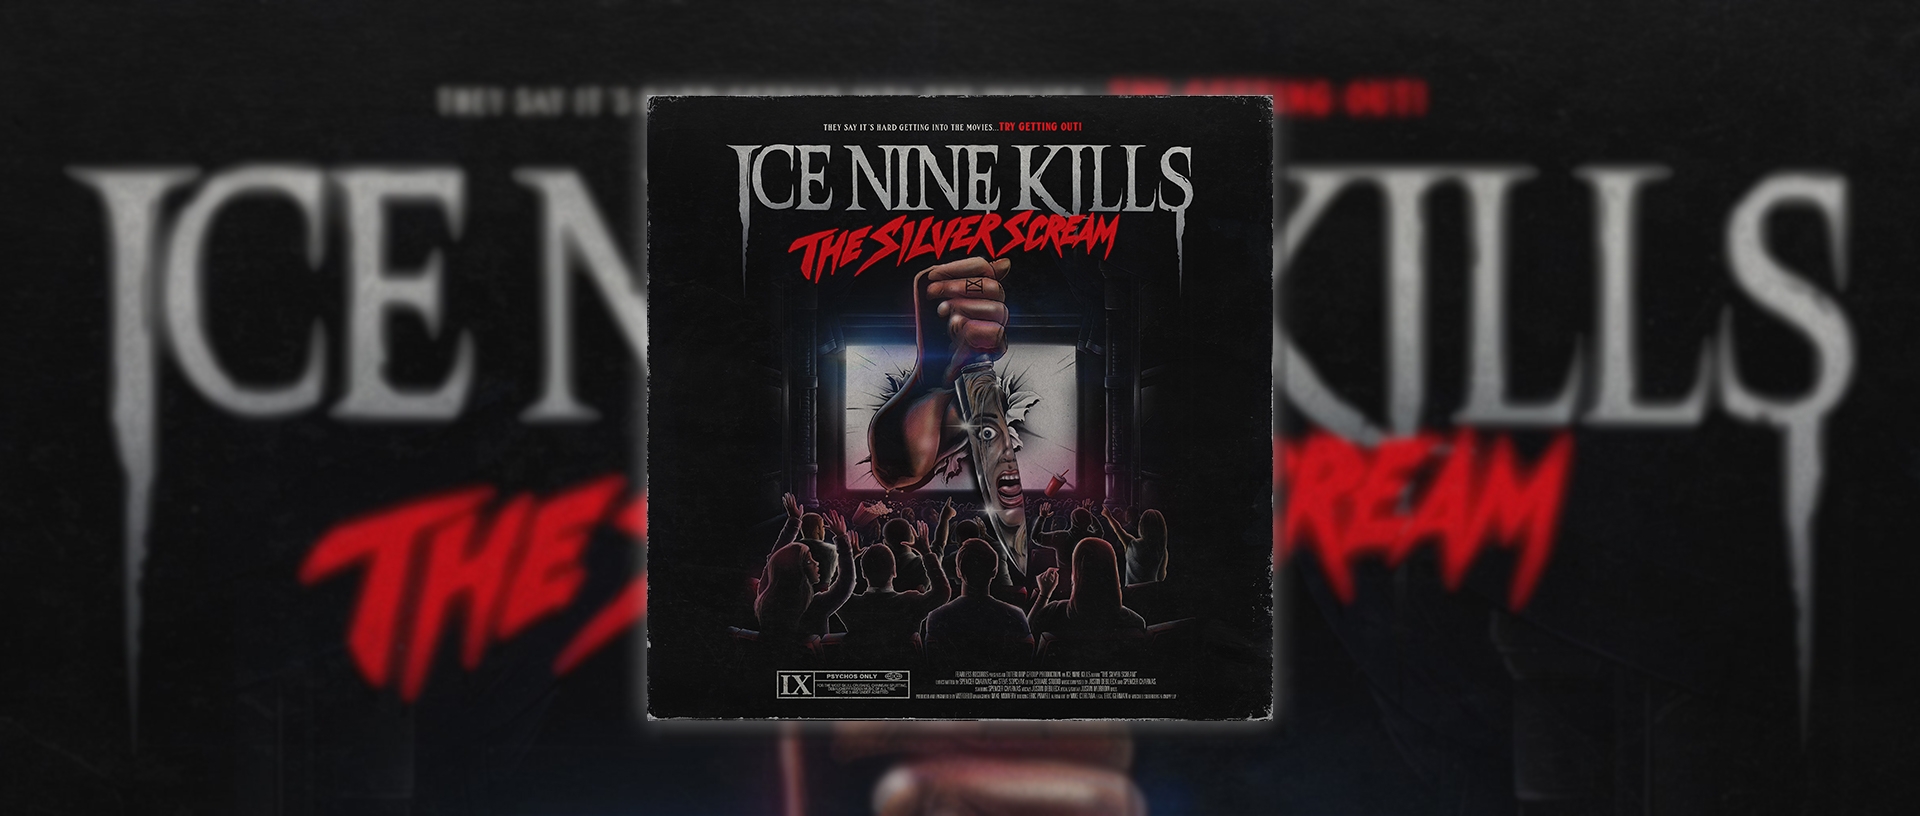 REVIEW: Ice Nine Kills – ‘The Silver Scream’